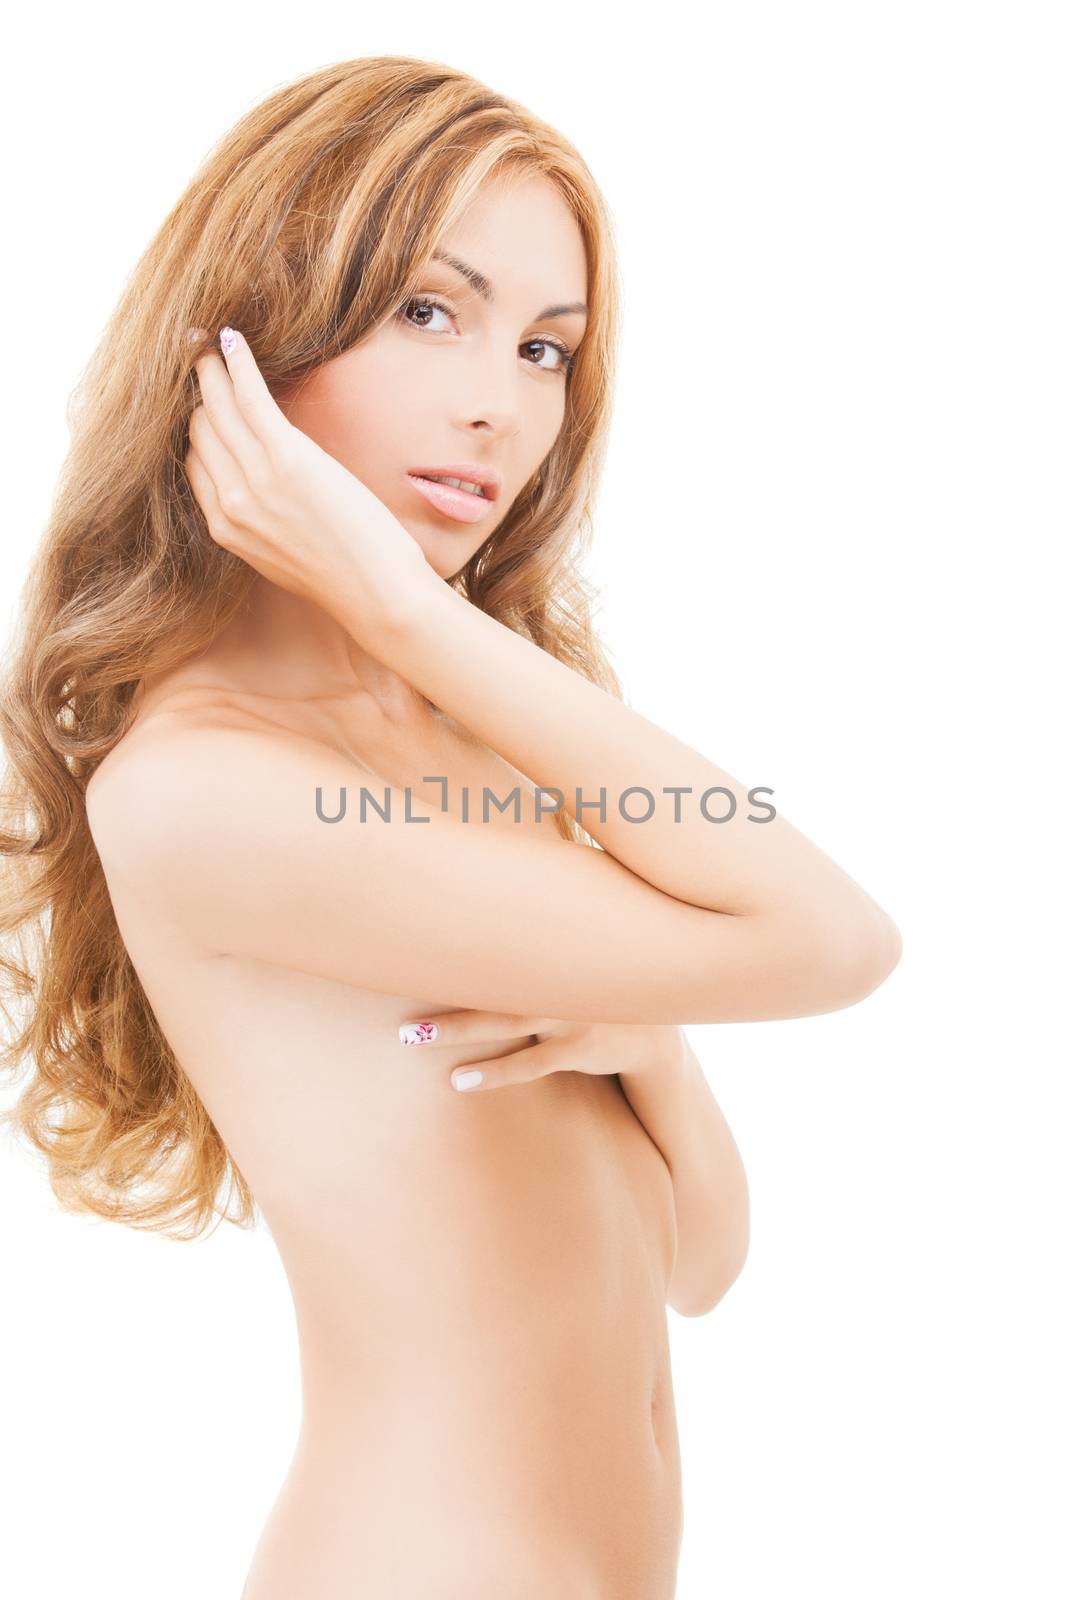 beautiful topless woman by dolgachov